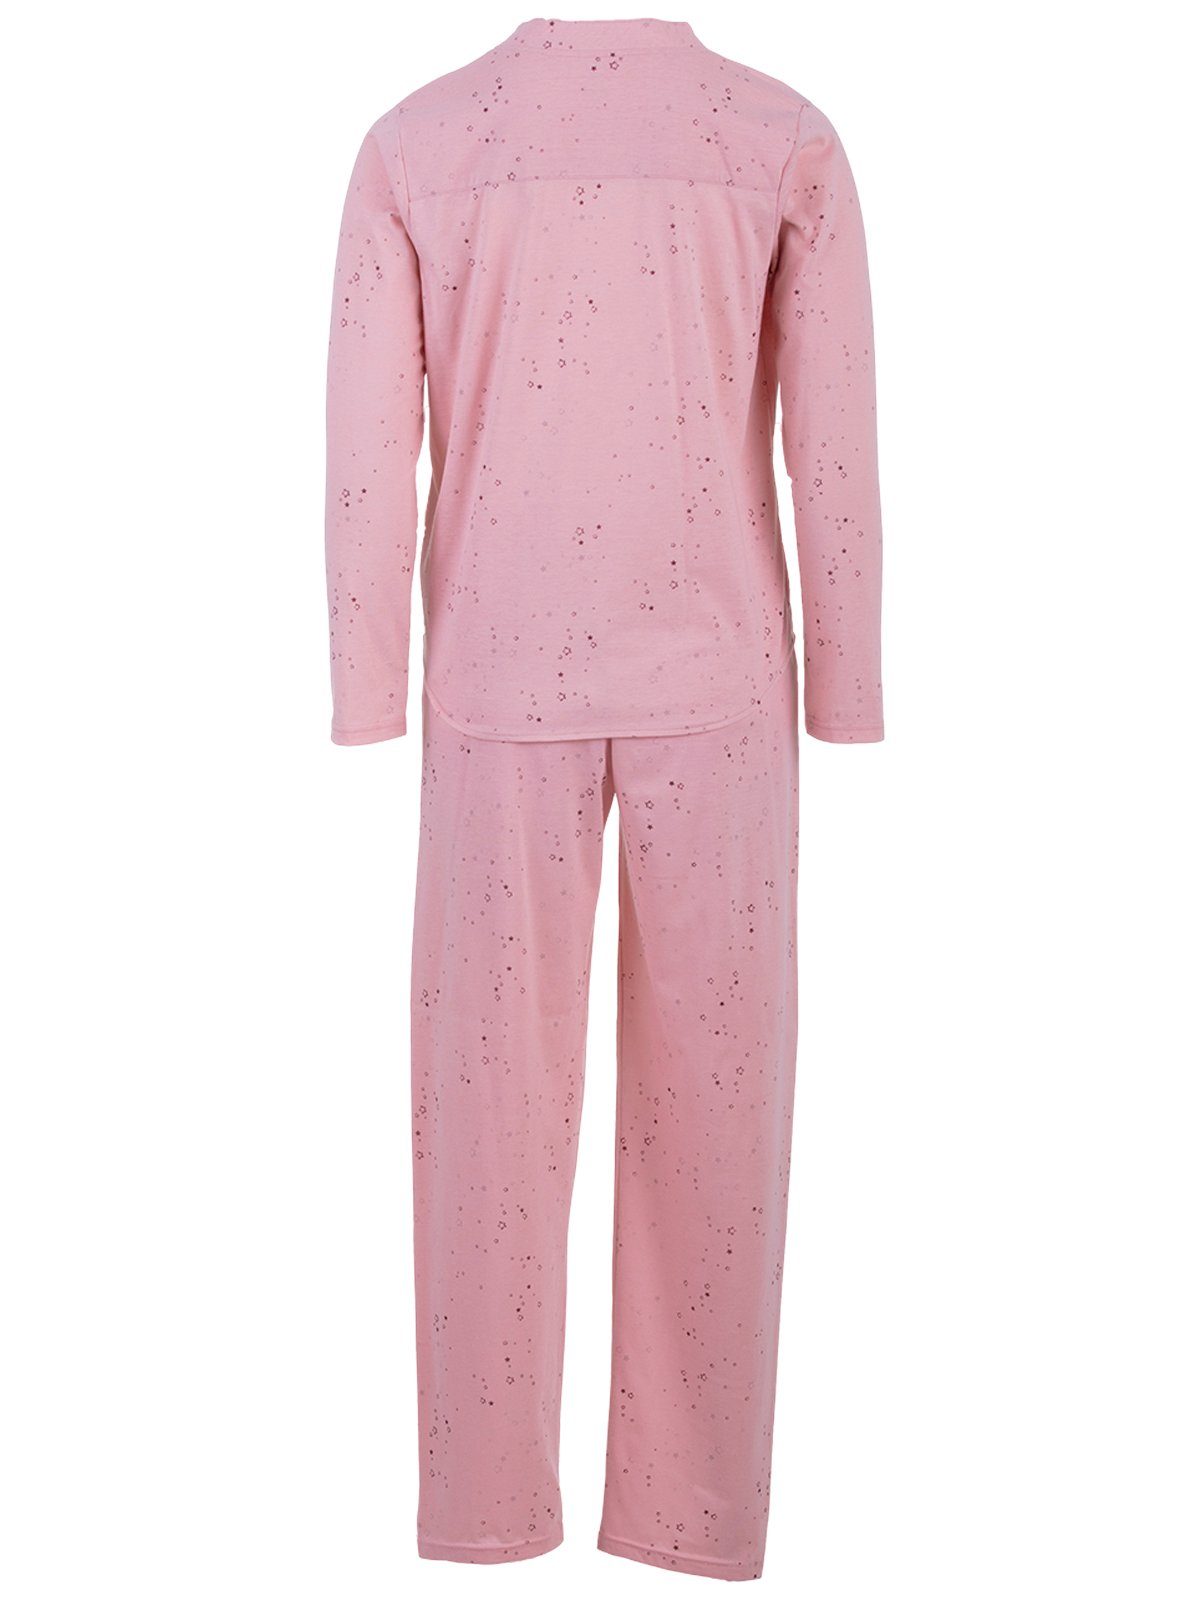 Langarm Pyjama rosa zeitlos Schlafanzug Sterne - Set